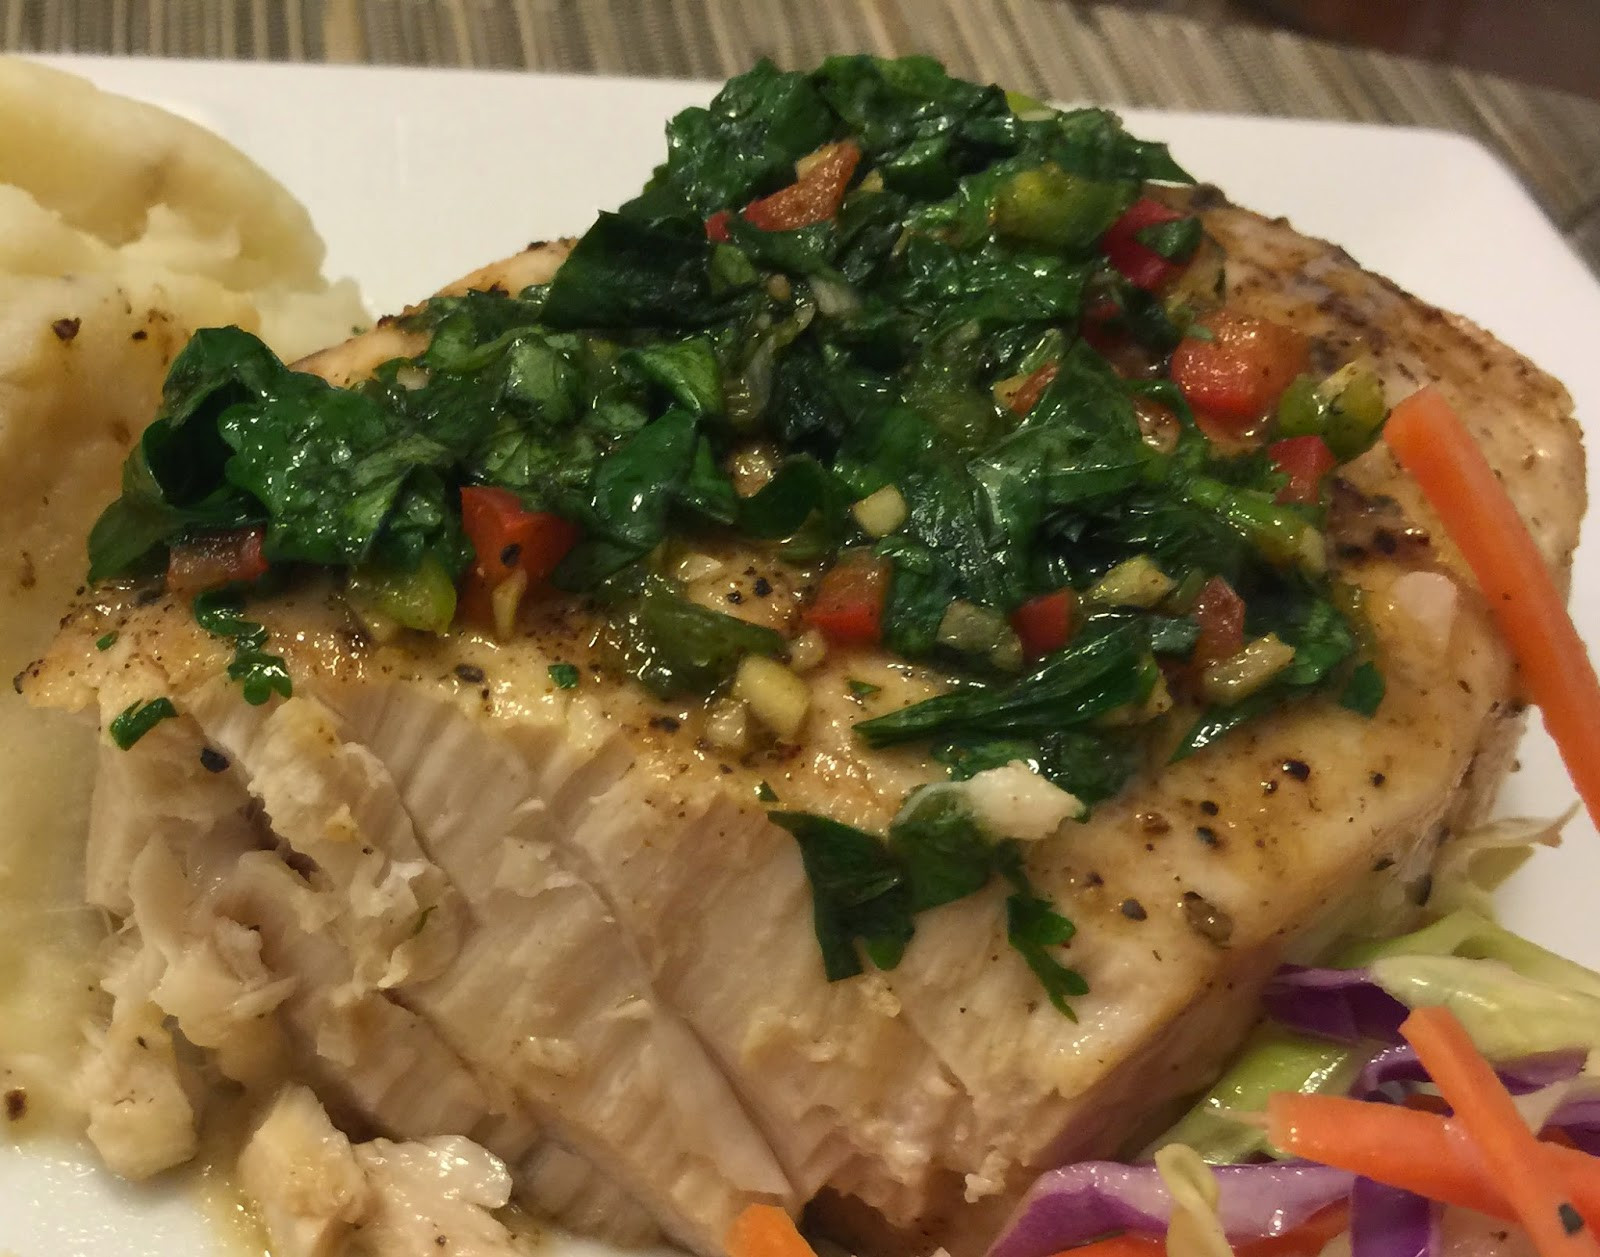 Marlin Fish Recipes
 TASTE OF HAWAII GRILLED STRIPED MARLIN